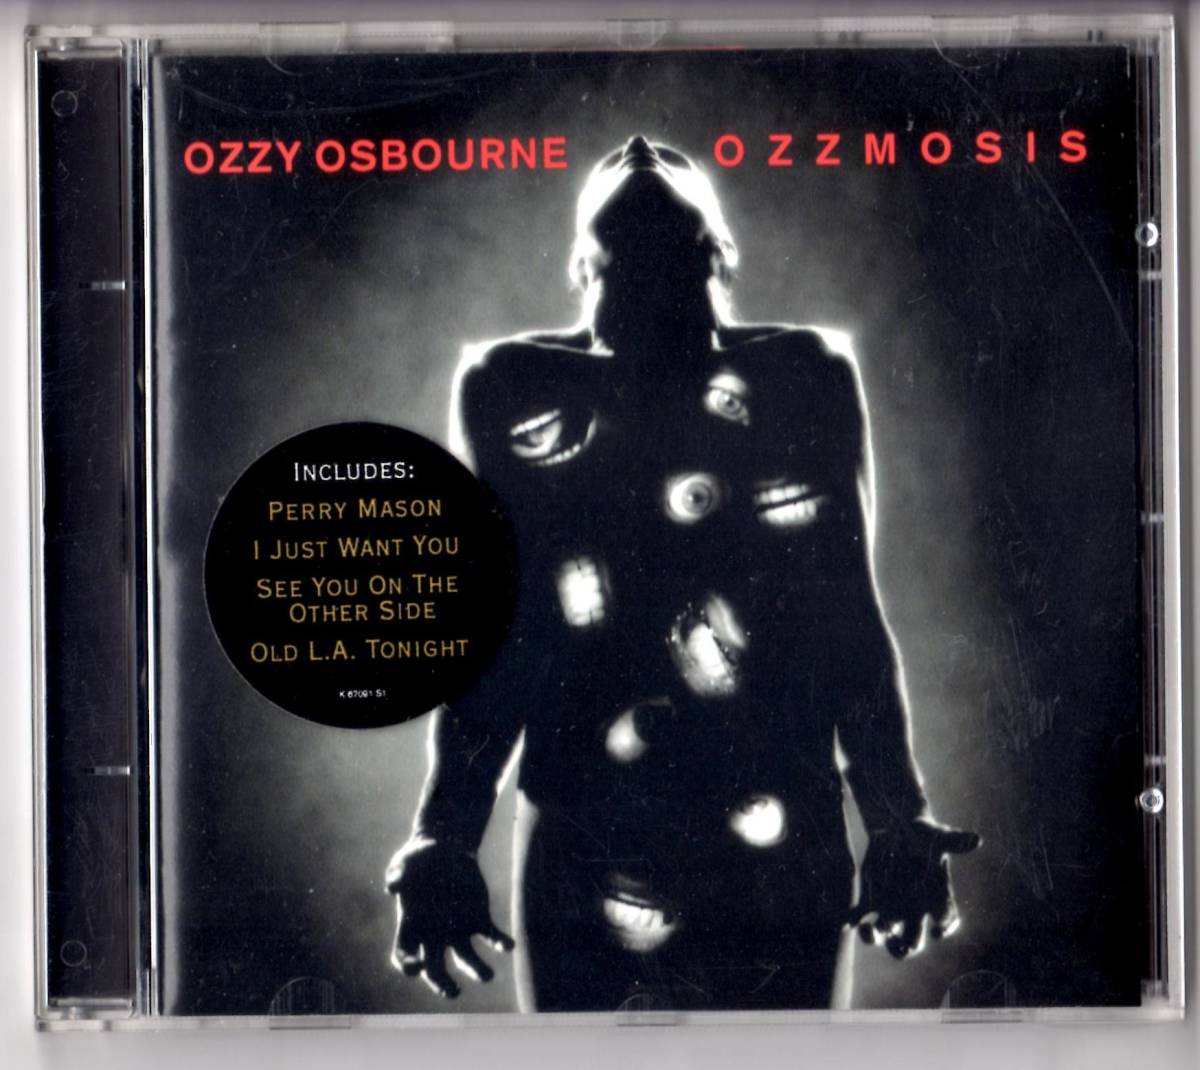 Used CD 輸入盤 オジー・オズボーン Ozzy Osbourne『オズモシス』- Ozzmosis(1995年)全10曲アメリカ盤